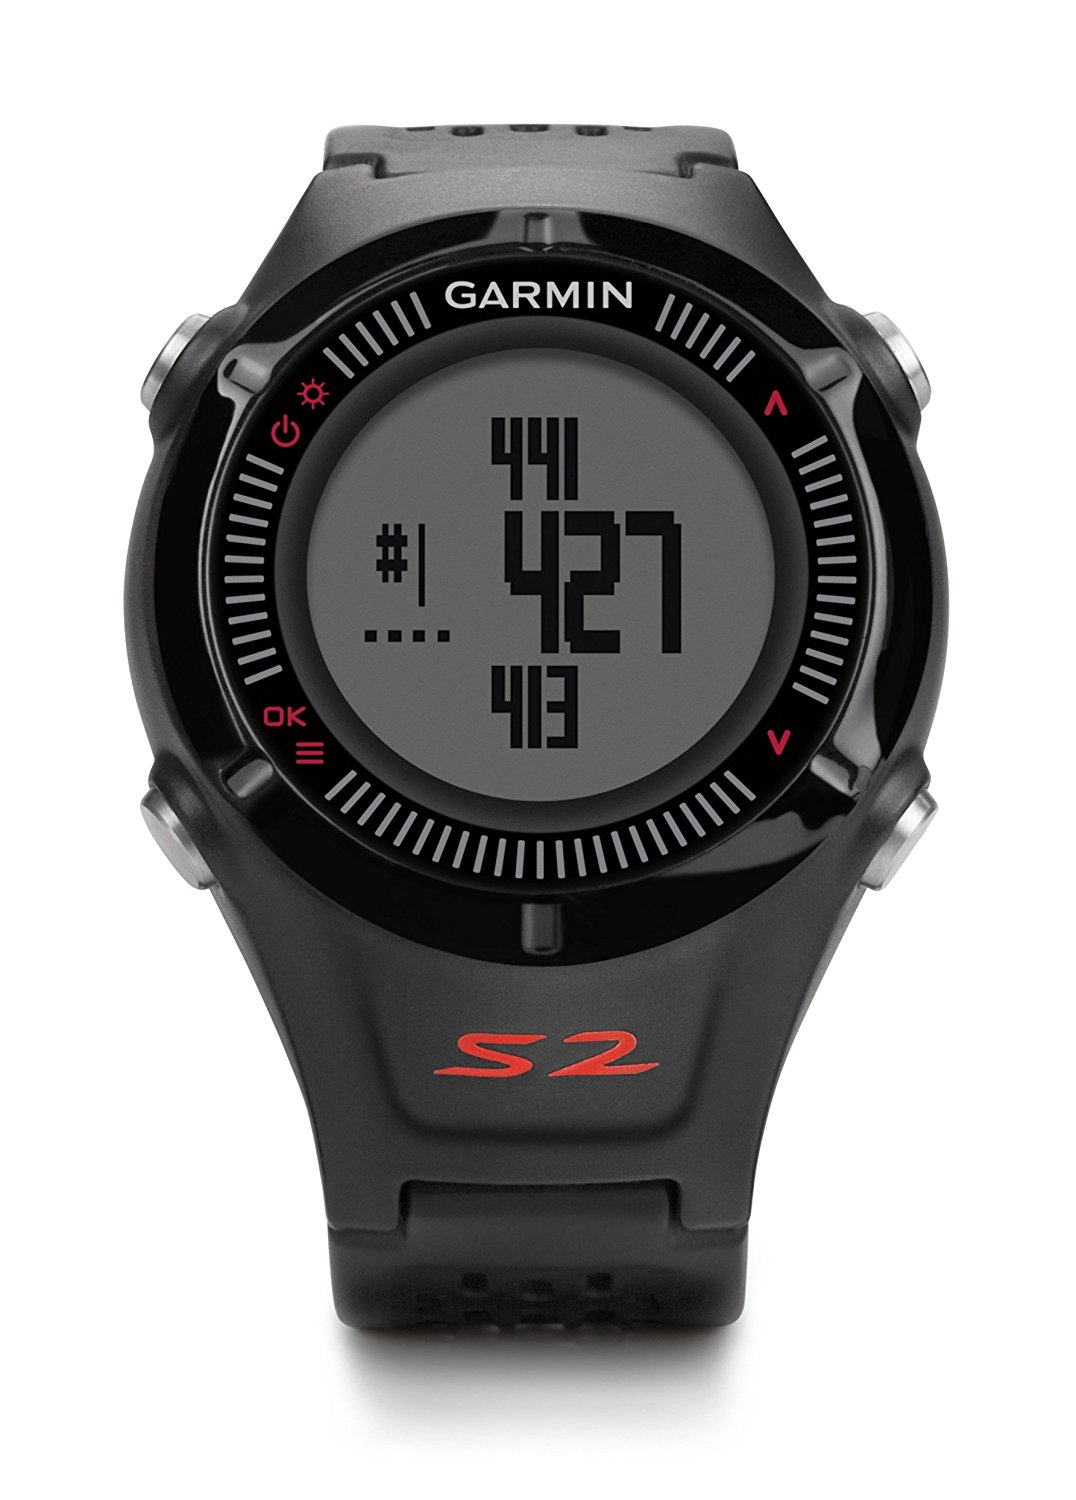 Đồng hồ Garmin Approach S2 GPS Golf Watch with Worldwide Courses (Black)